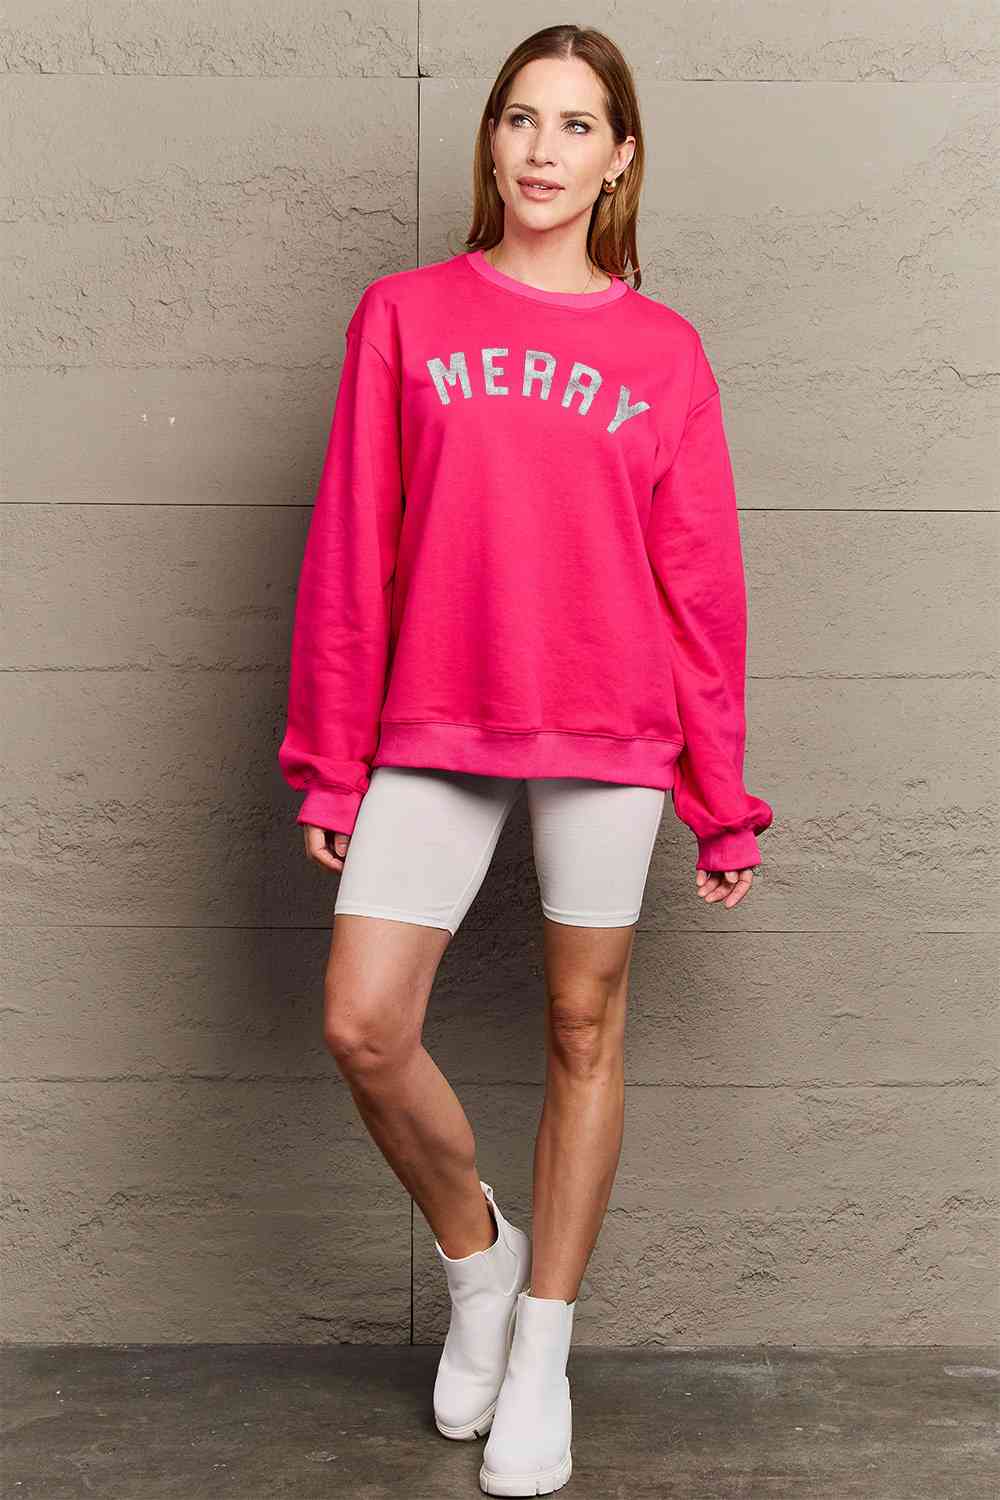 Simply Love Full Size MERRY Graphic Sweatshirt - Cotton Plus Cream